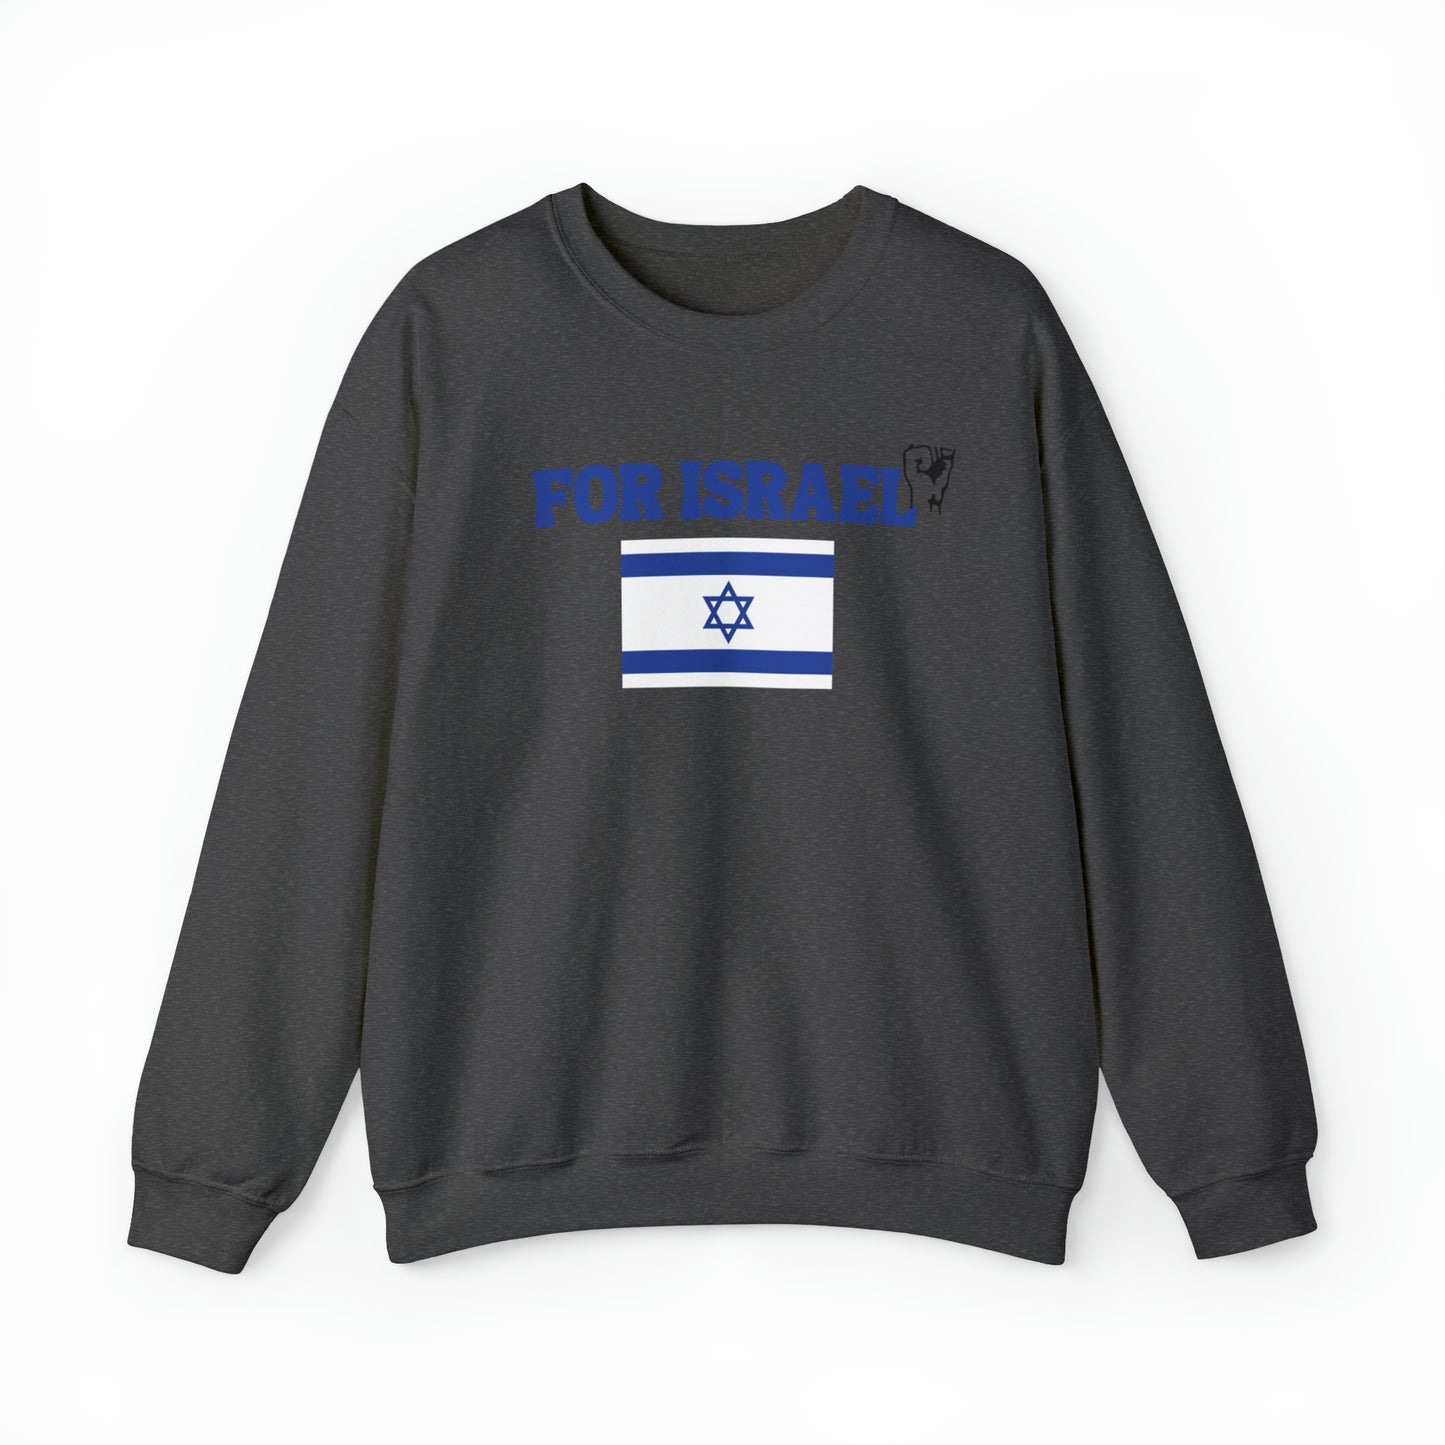 For Israel Unisex Heavy Blend Crewneck Sweatshirt